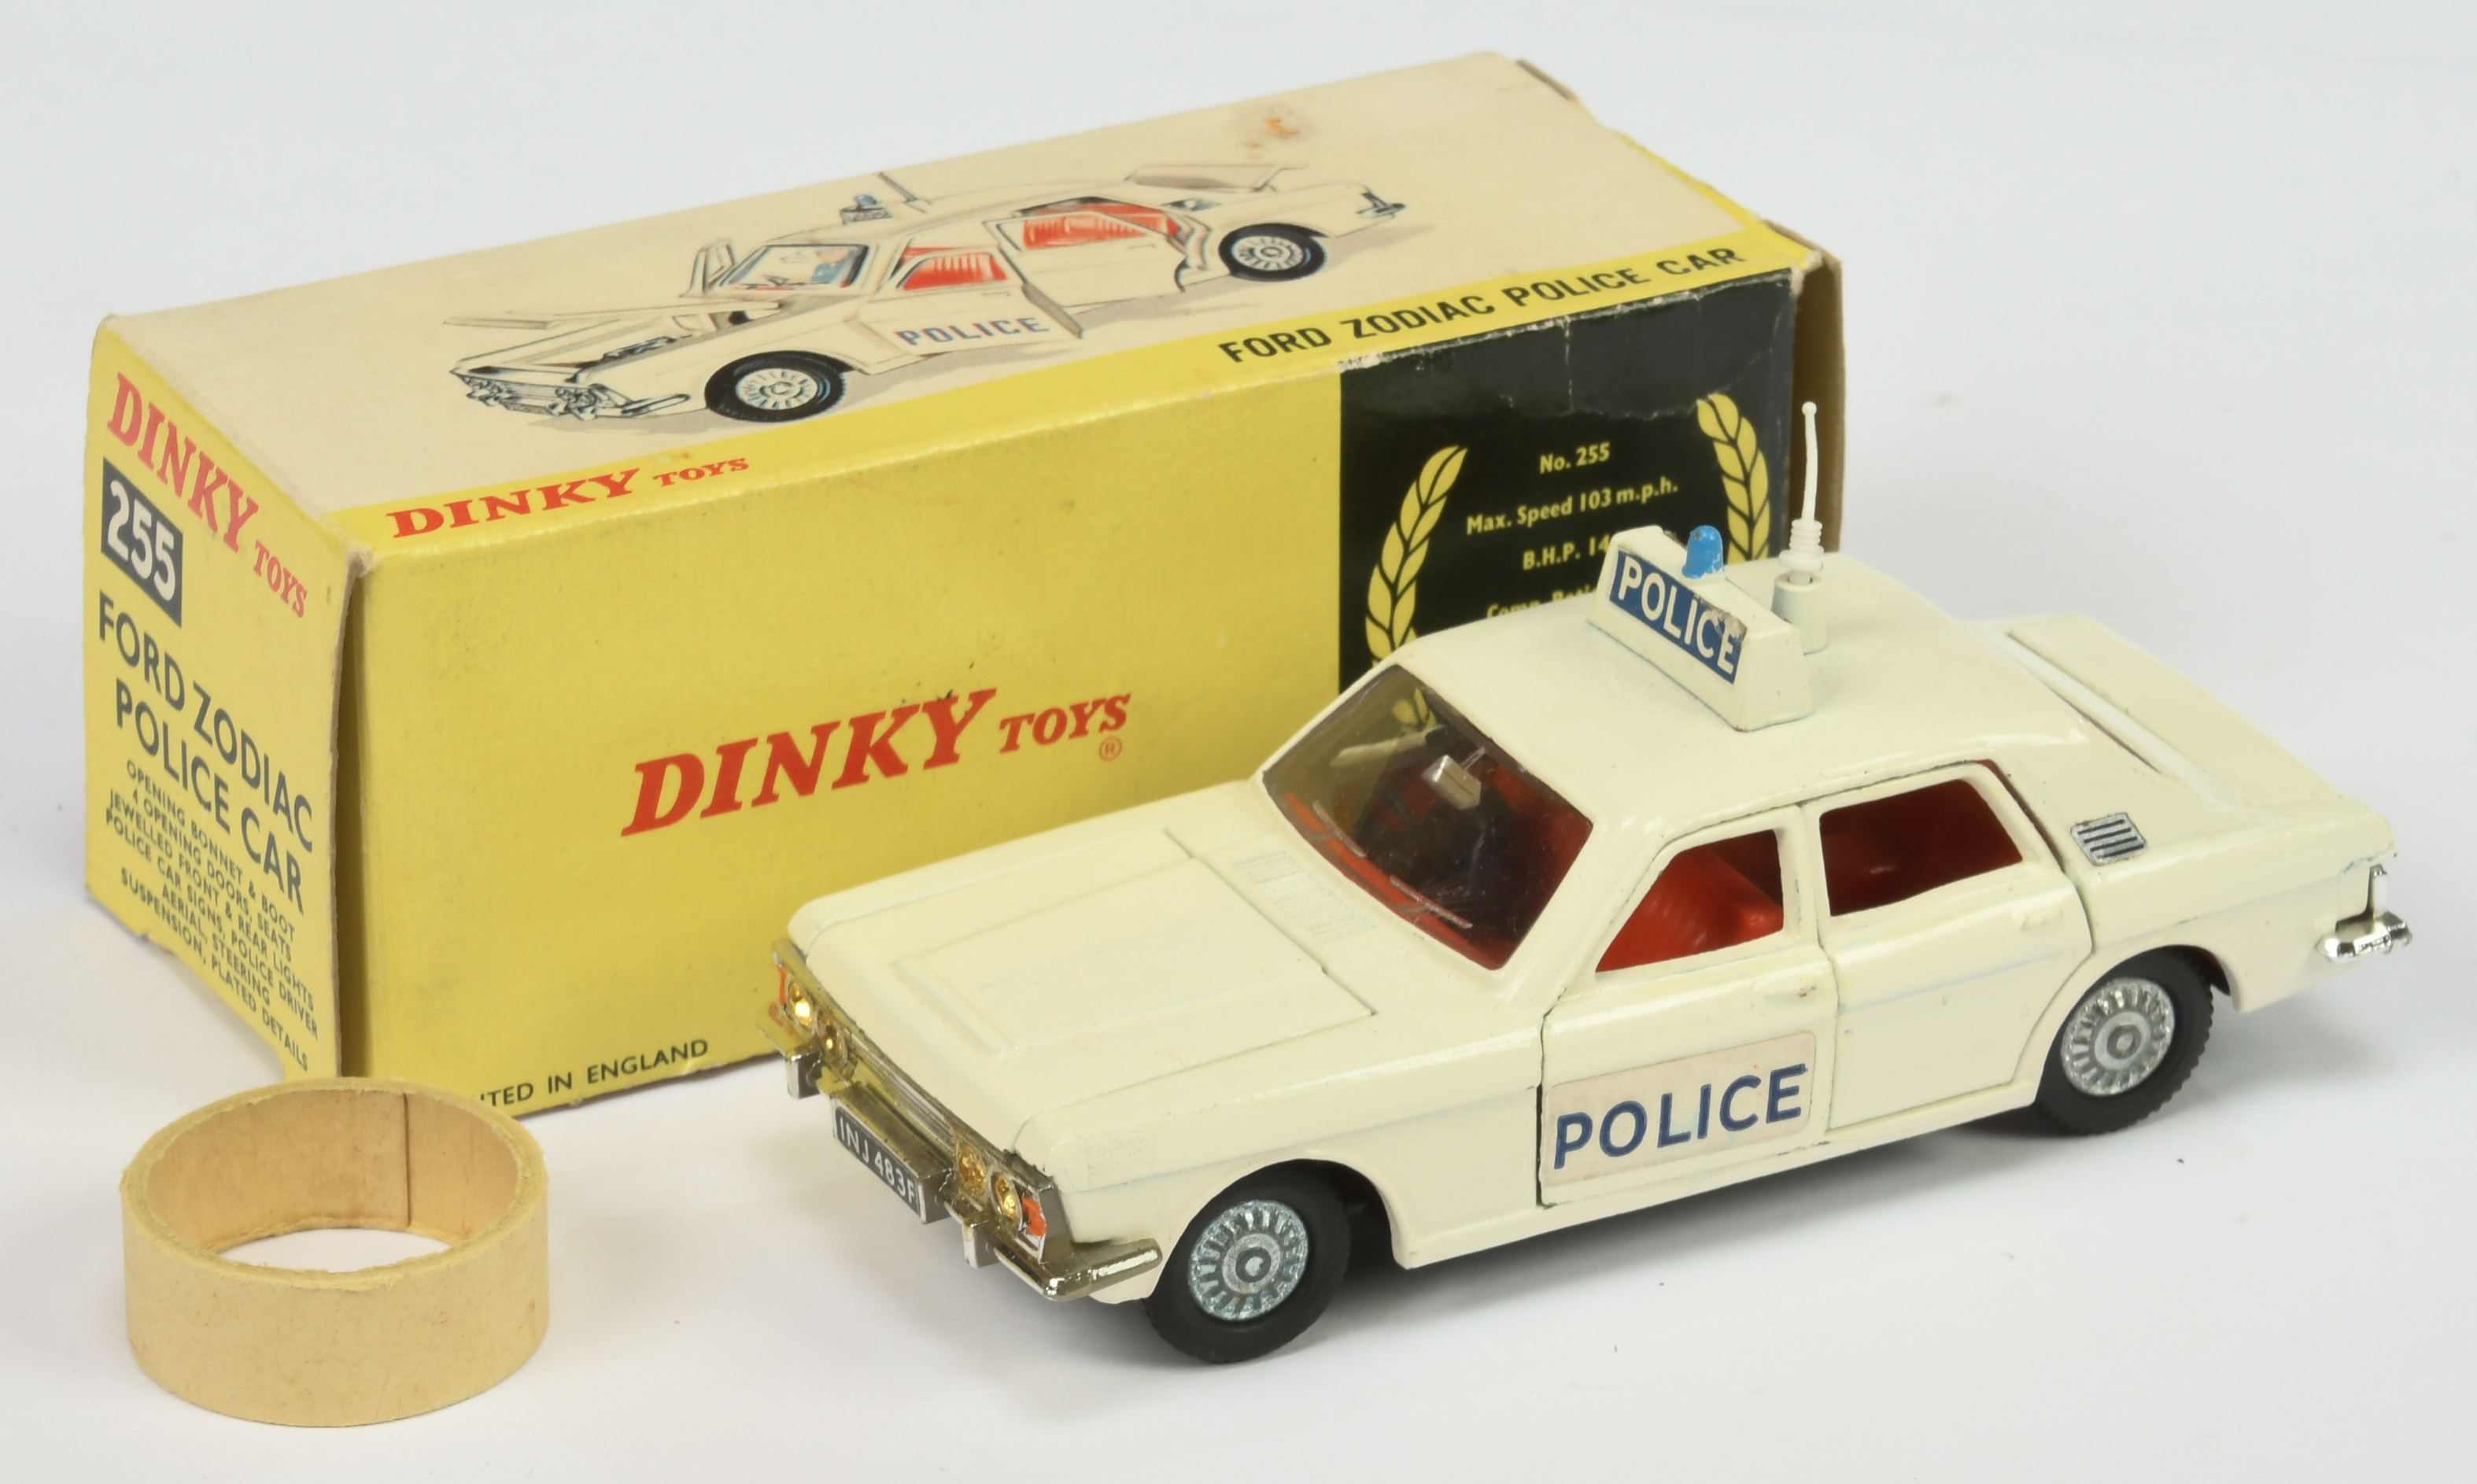 Dinky Toys 255 Ford Zodiac "Police" Car - Off white body, red interior,chrome trim, cast detailed...